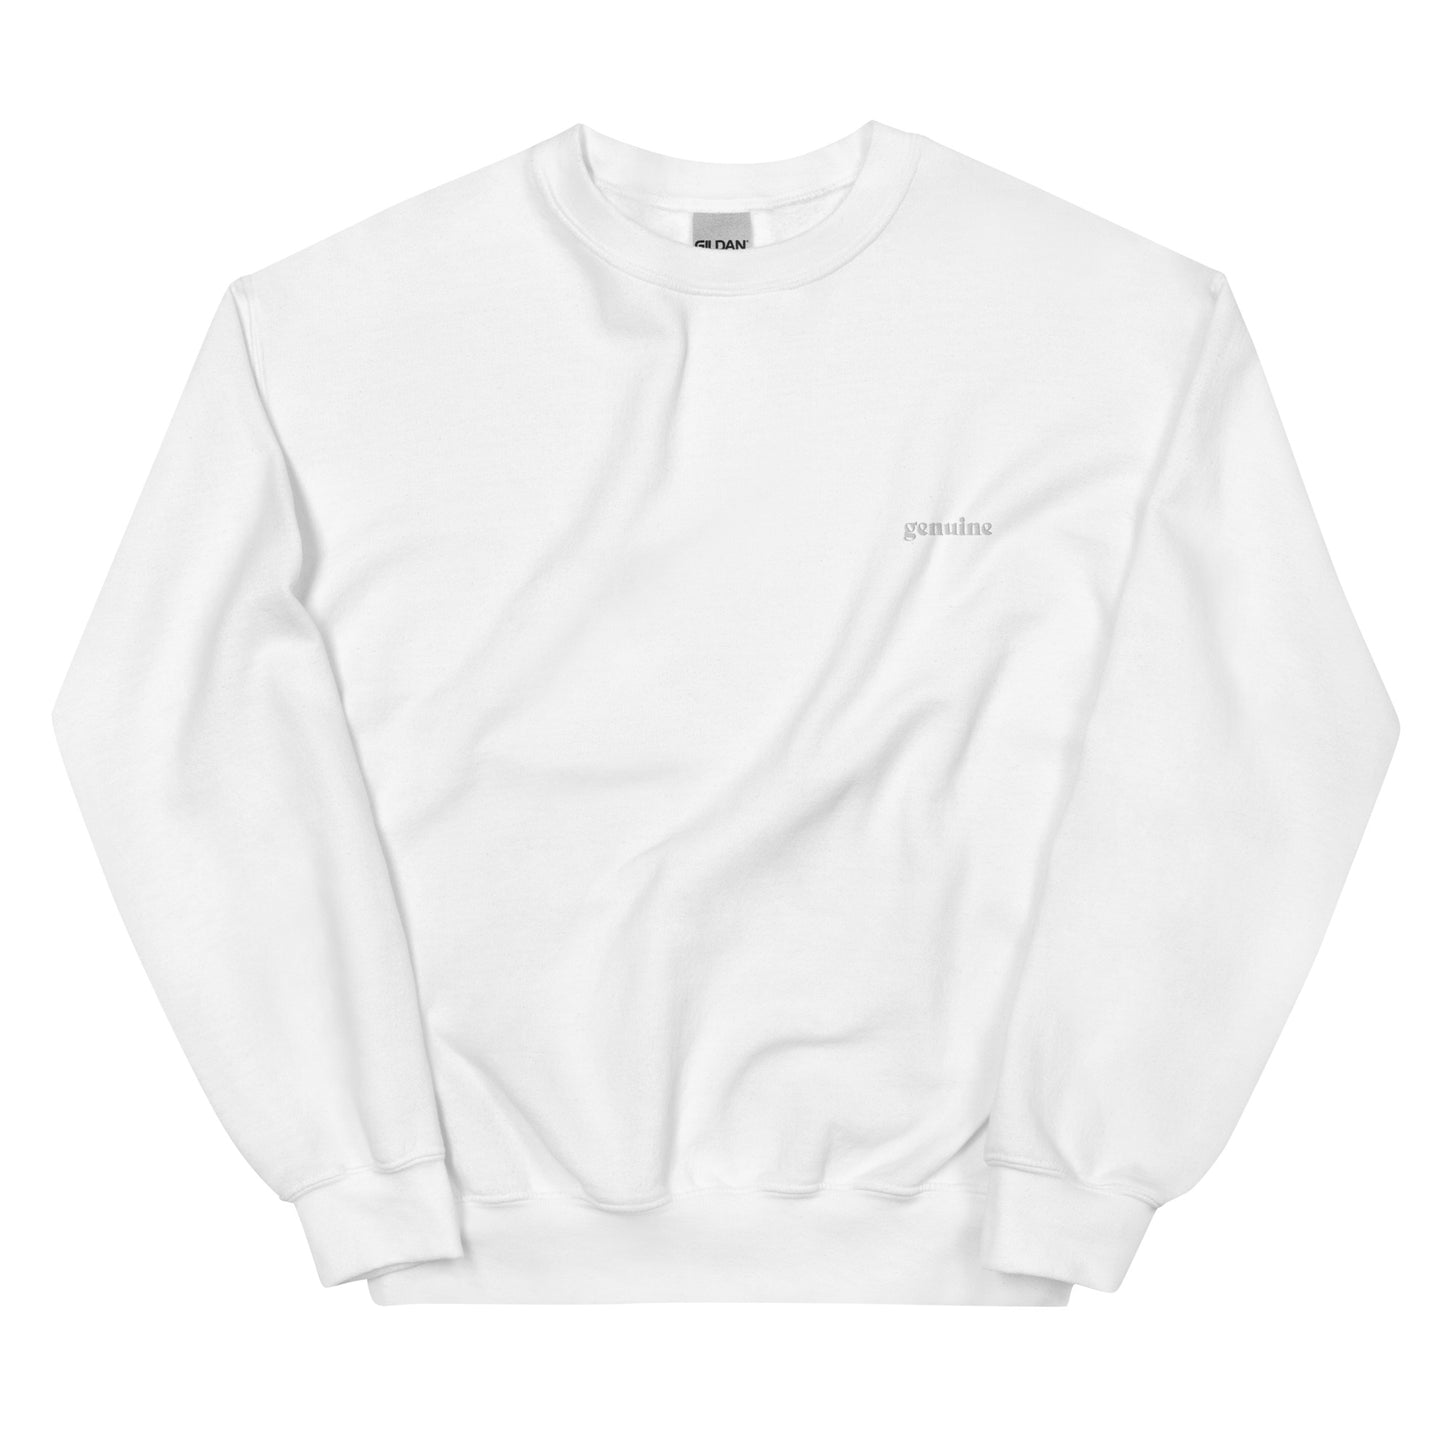 Genuine White Embroidered Logo Sweatshirt Unisex